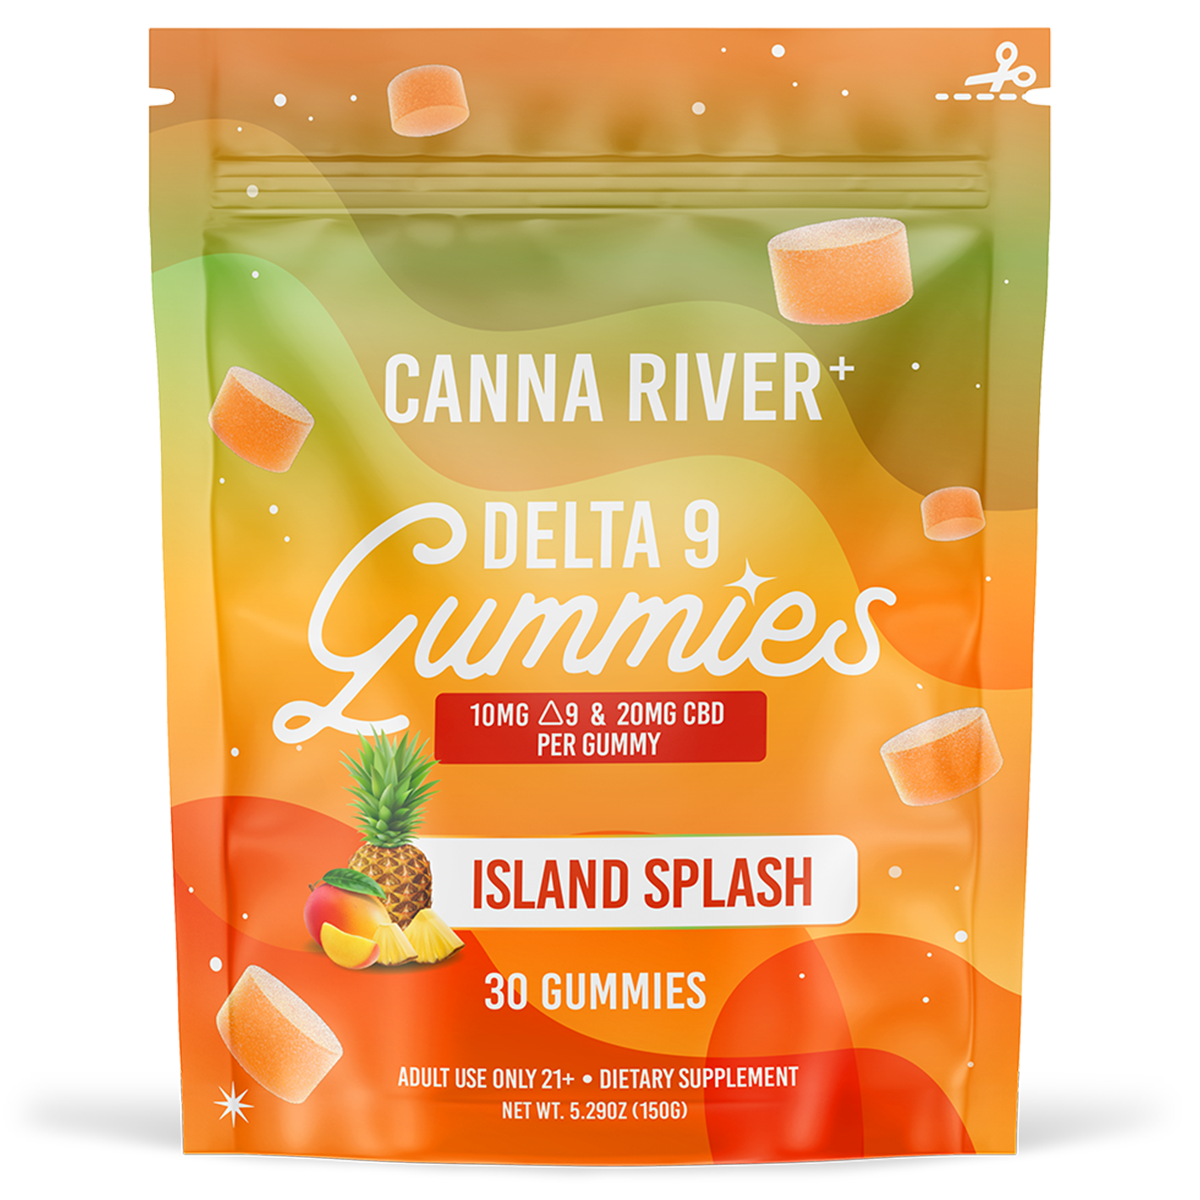 Canna River - Delta 9 Gummies - Island Splash - 30 Gummies (10MG Delta 9 & 20MG CBD Each)